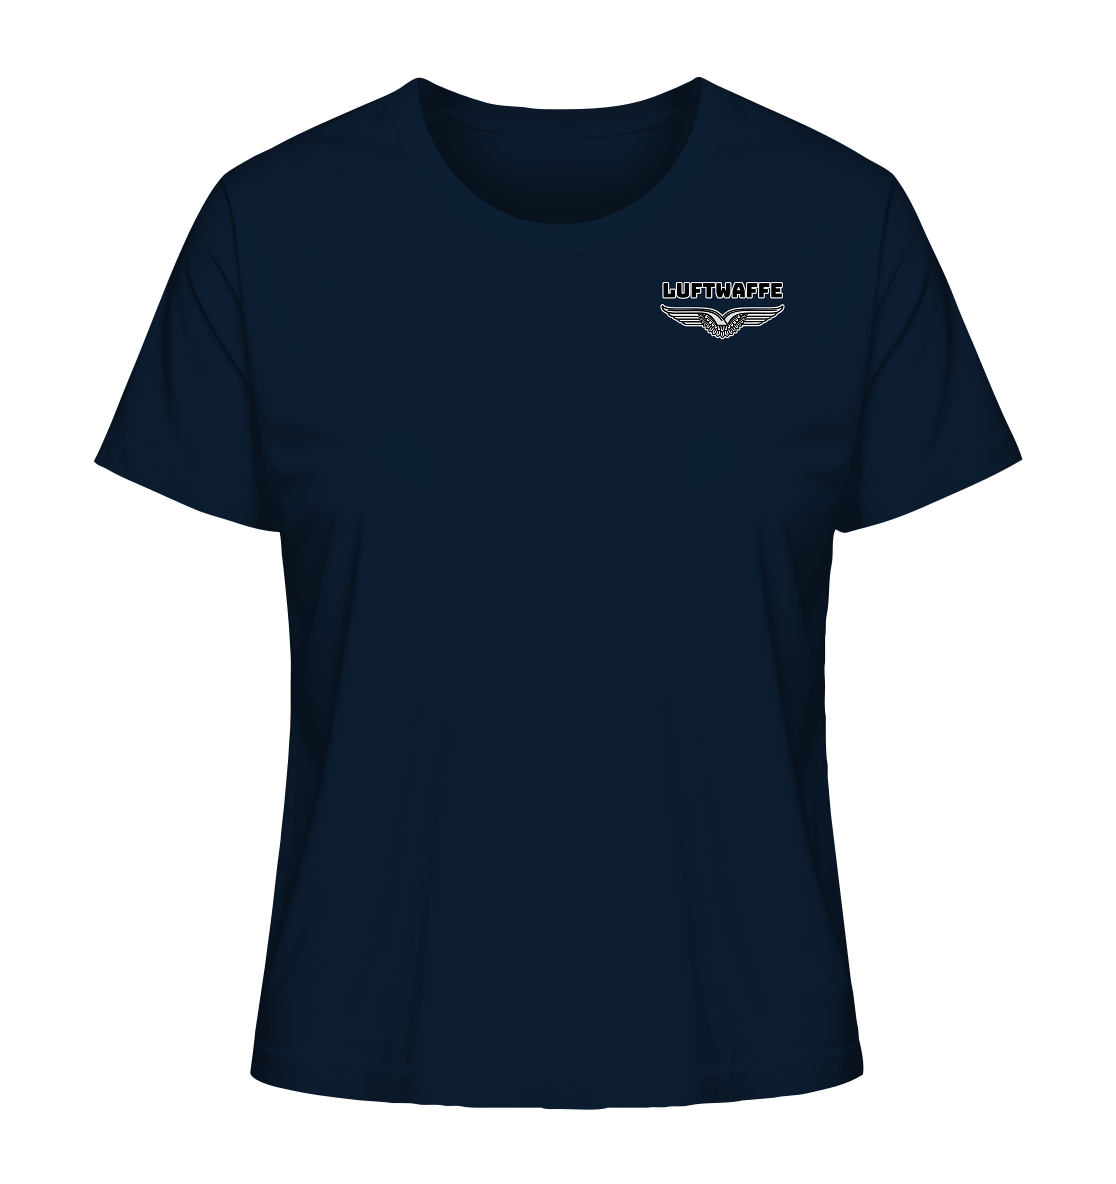 Team Luftwaffe - Tornado - Ladies Organic Shirt